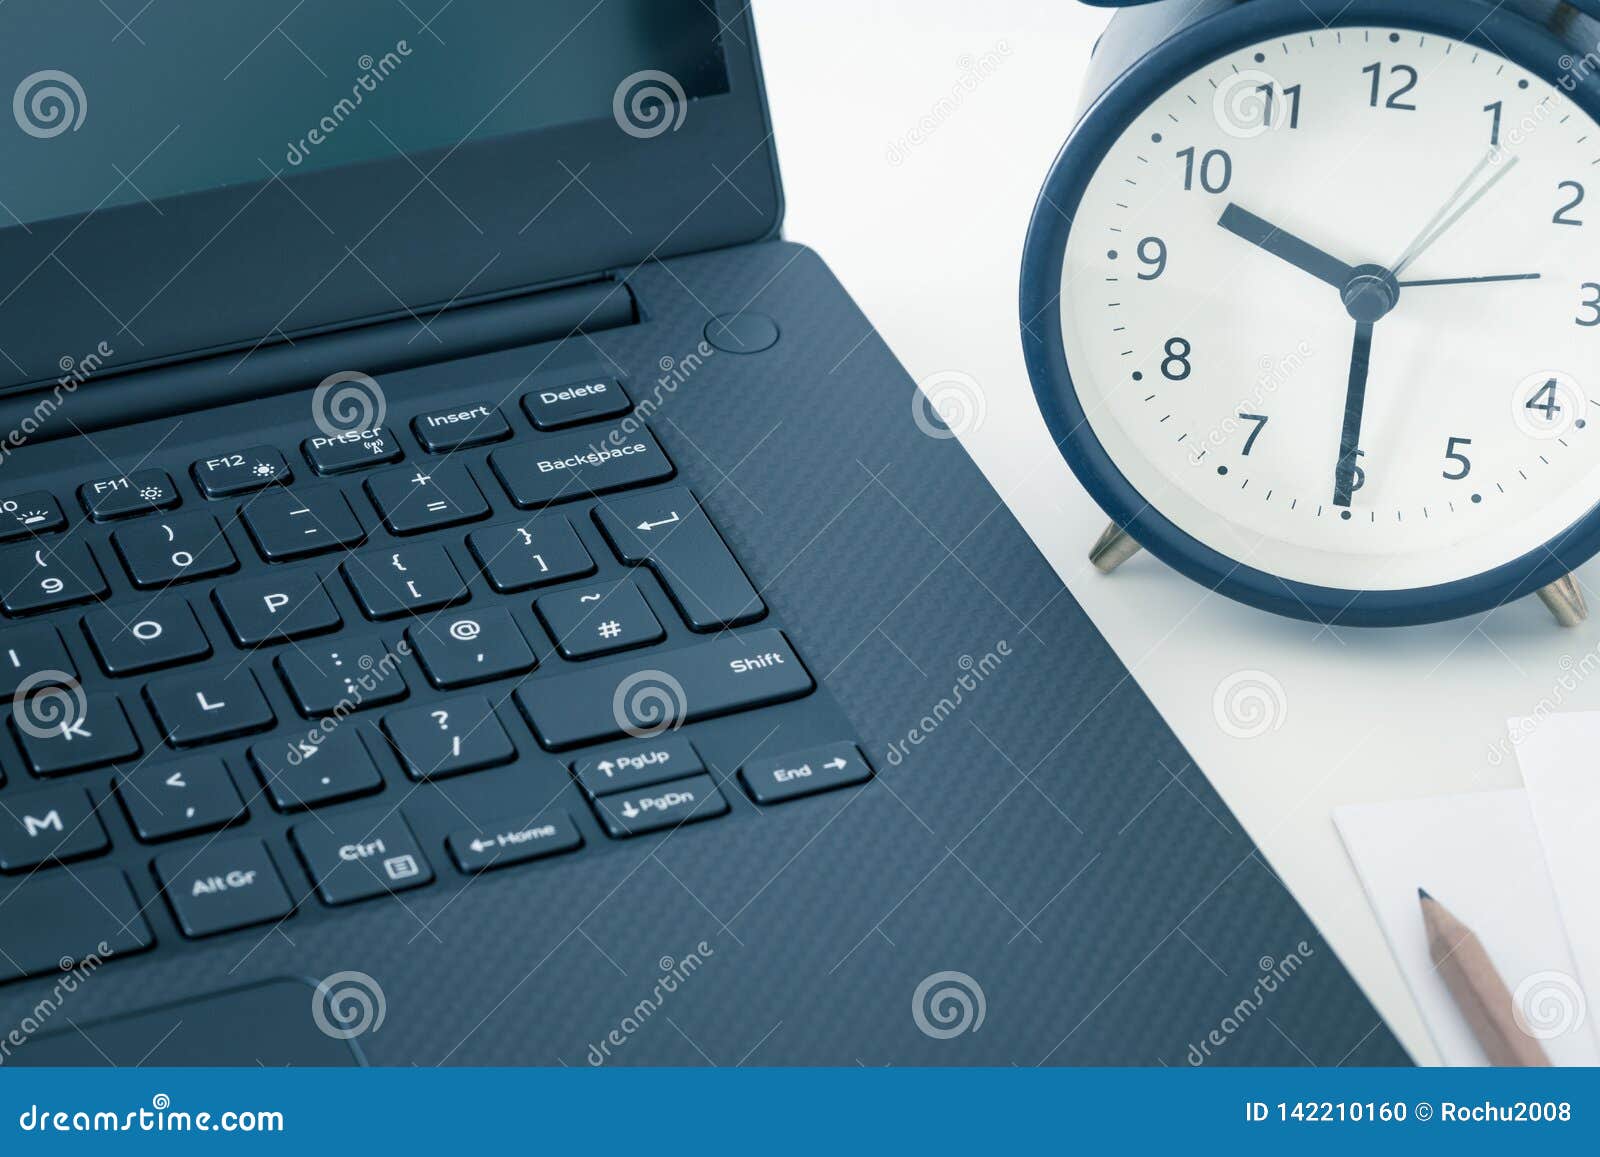 computer work timer